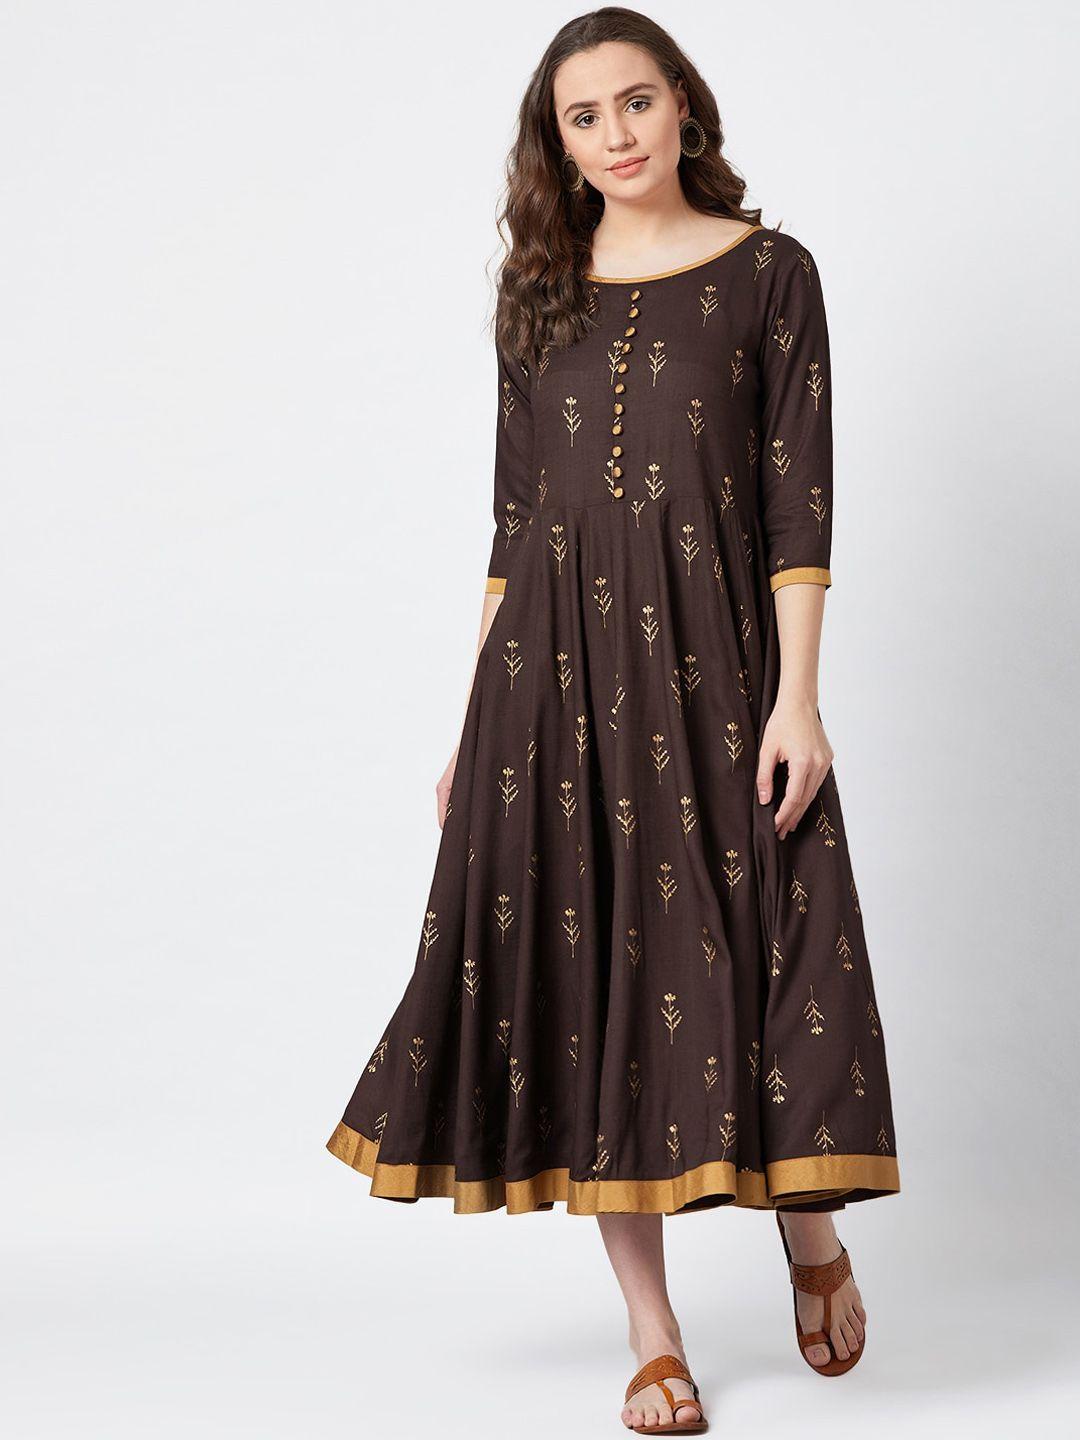 panit-women-brown-foil-printed-ethnic-a-line-dress